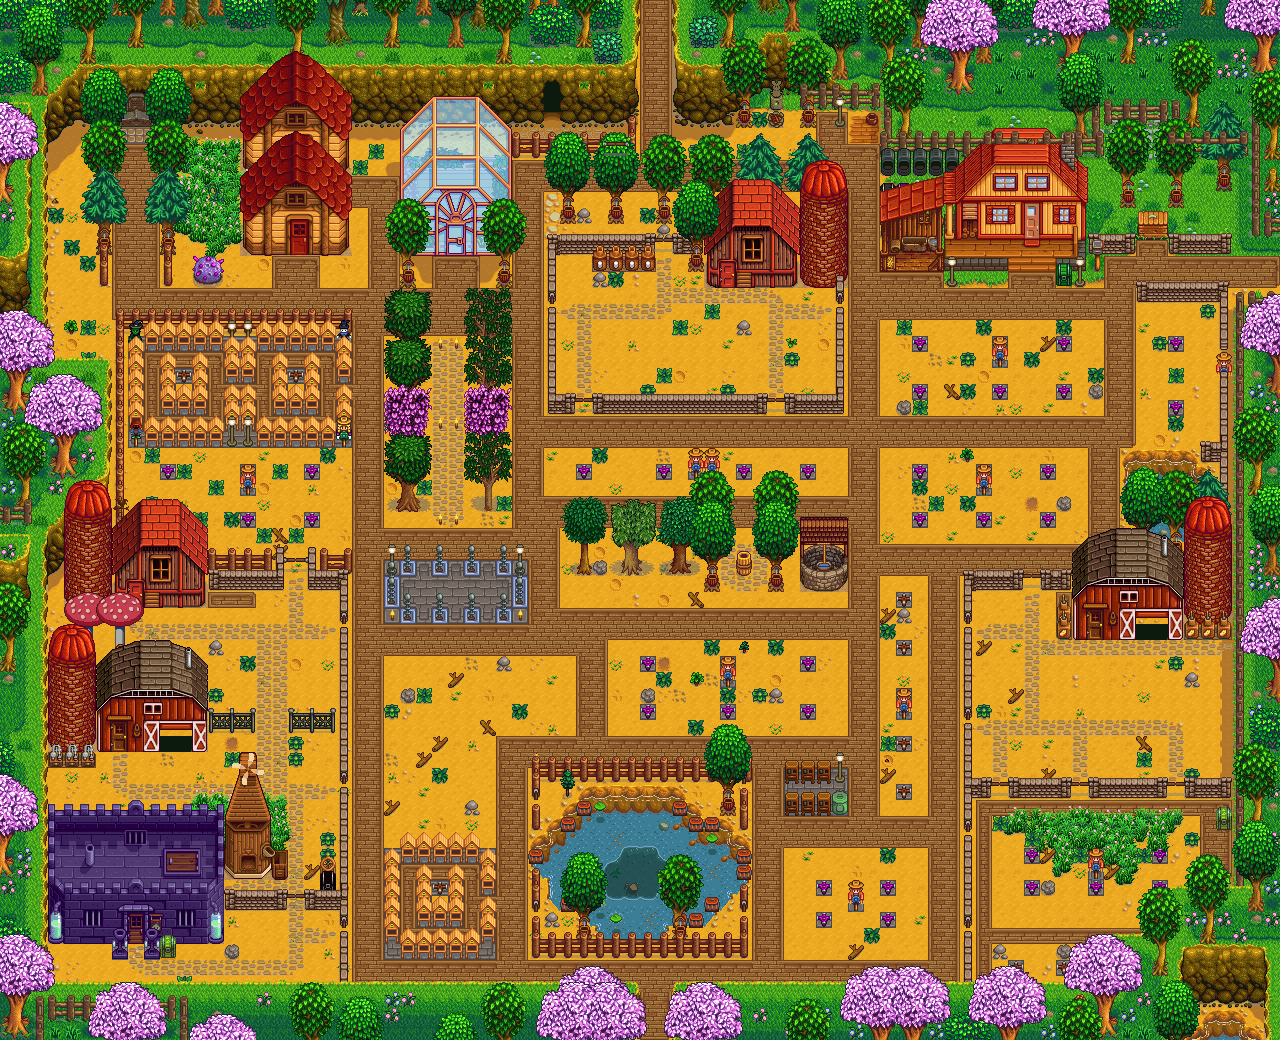 harvest moon ds farm layout